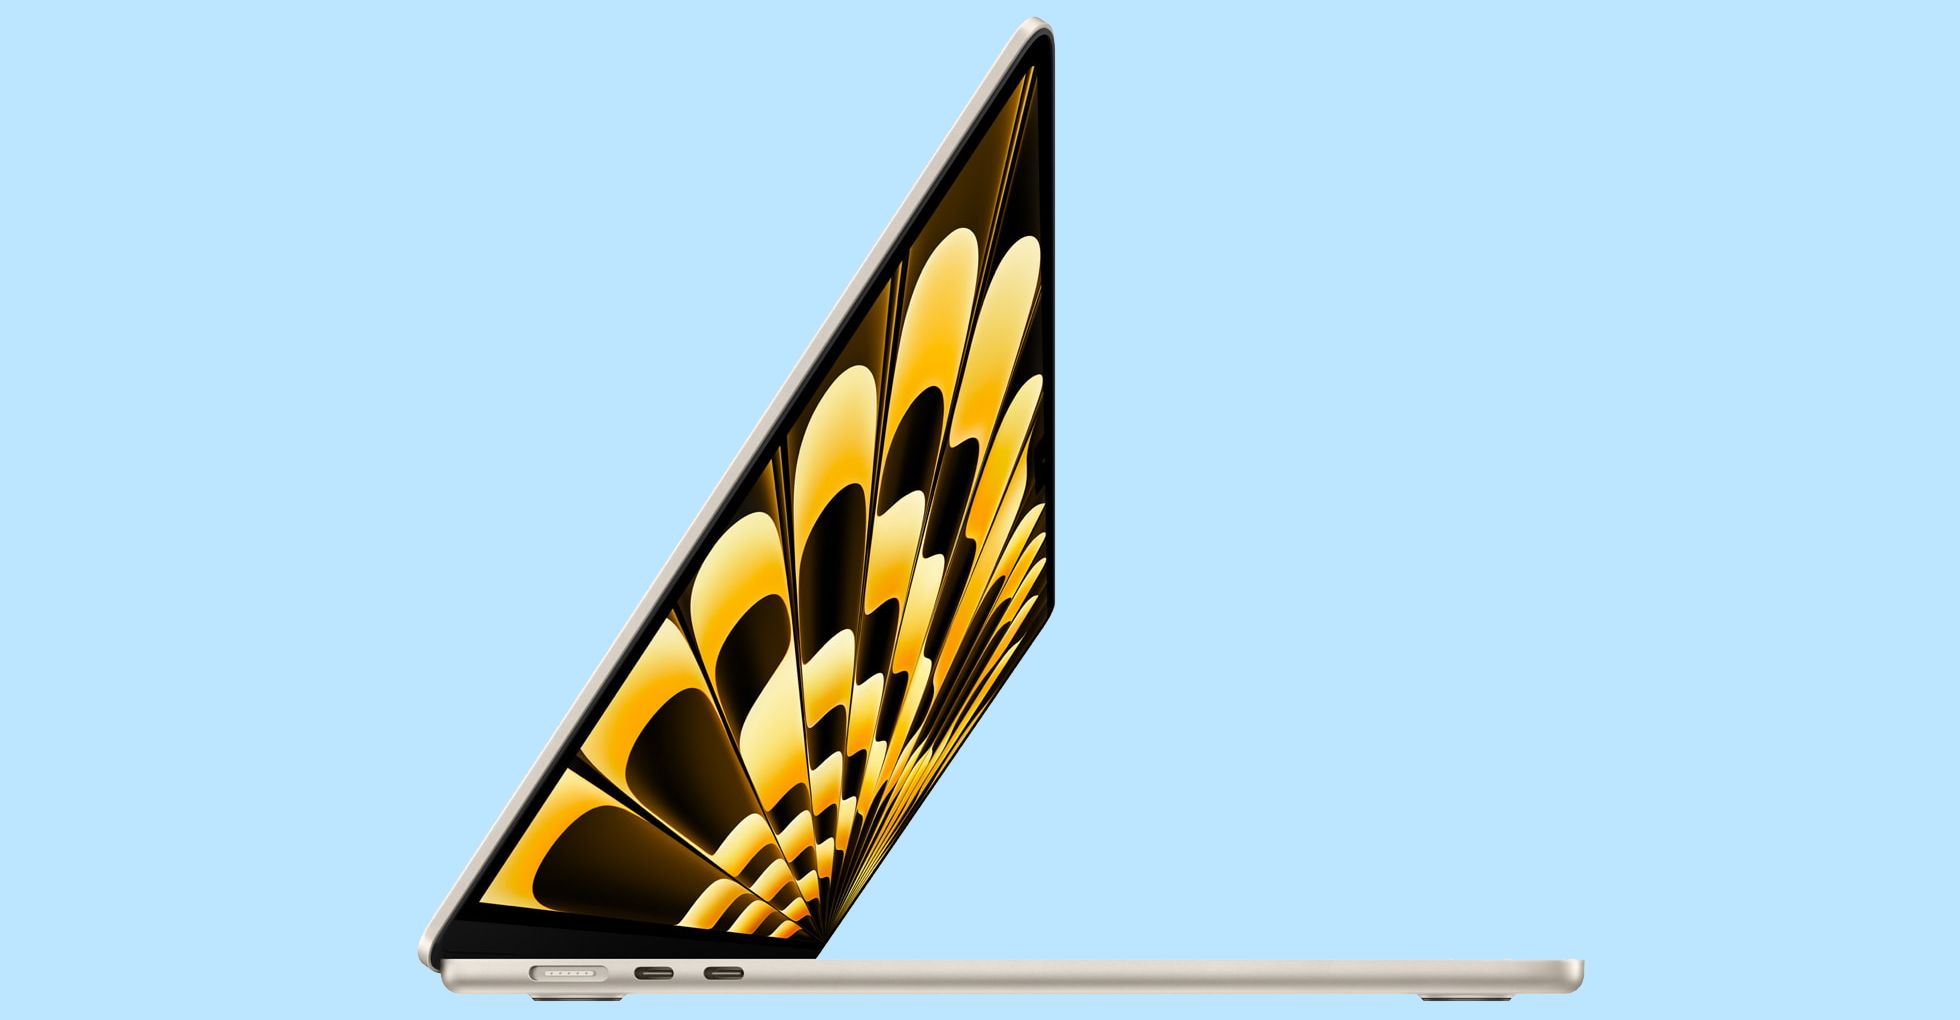 15-inch MacBook Air design